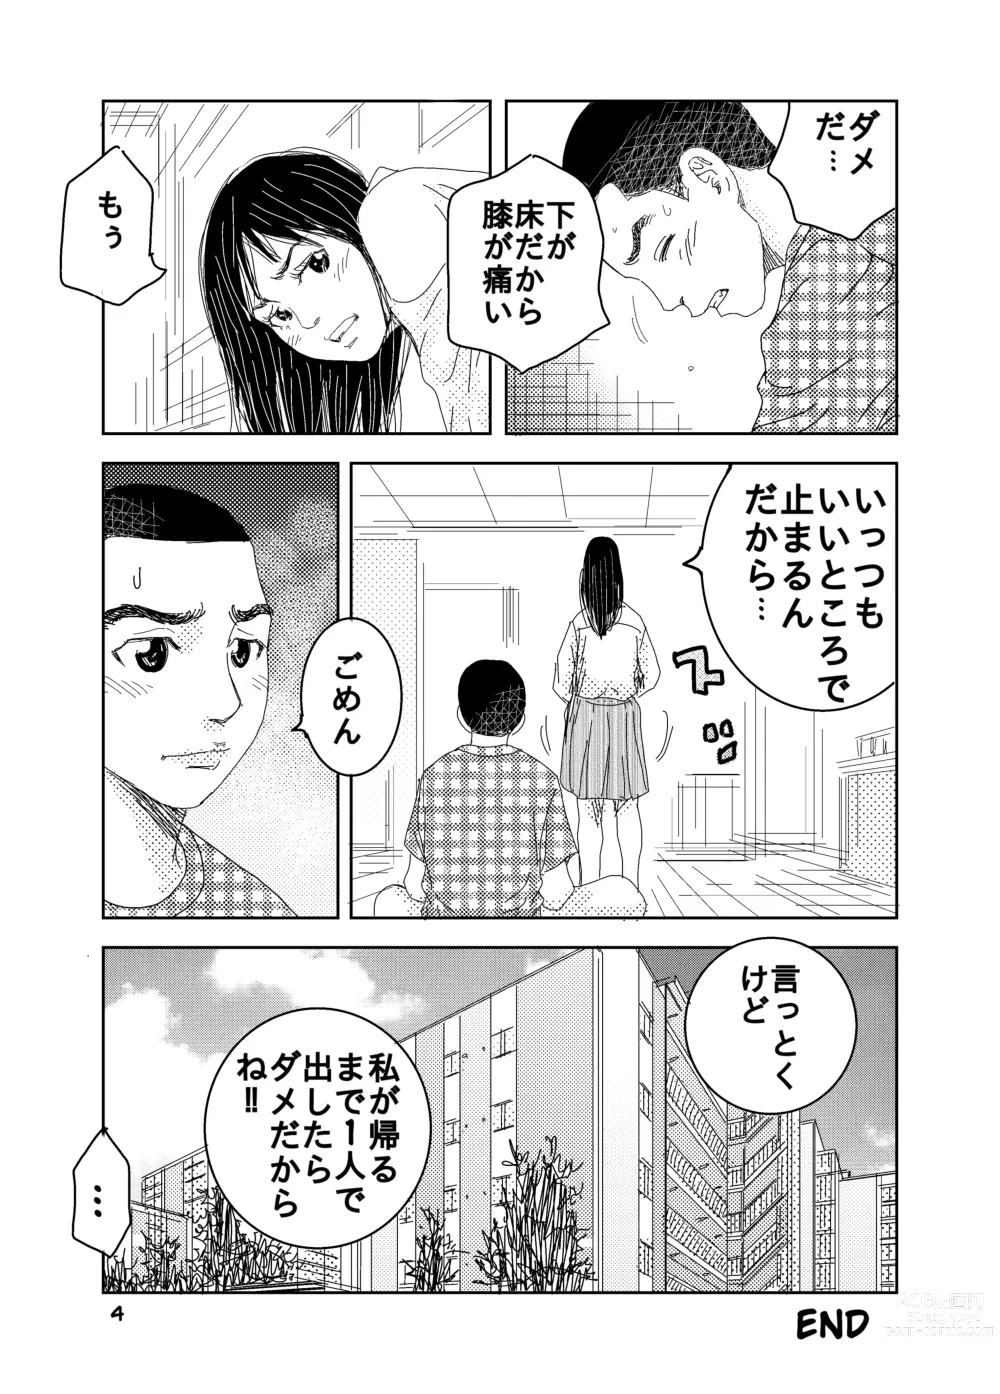 Page 4 of doujinshi Short Erogram